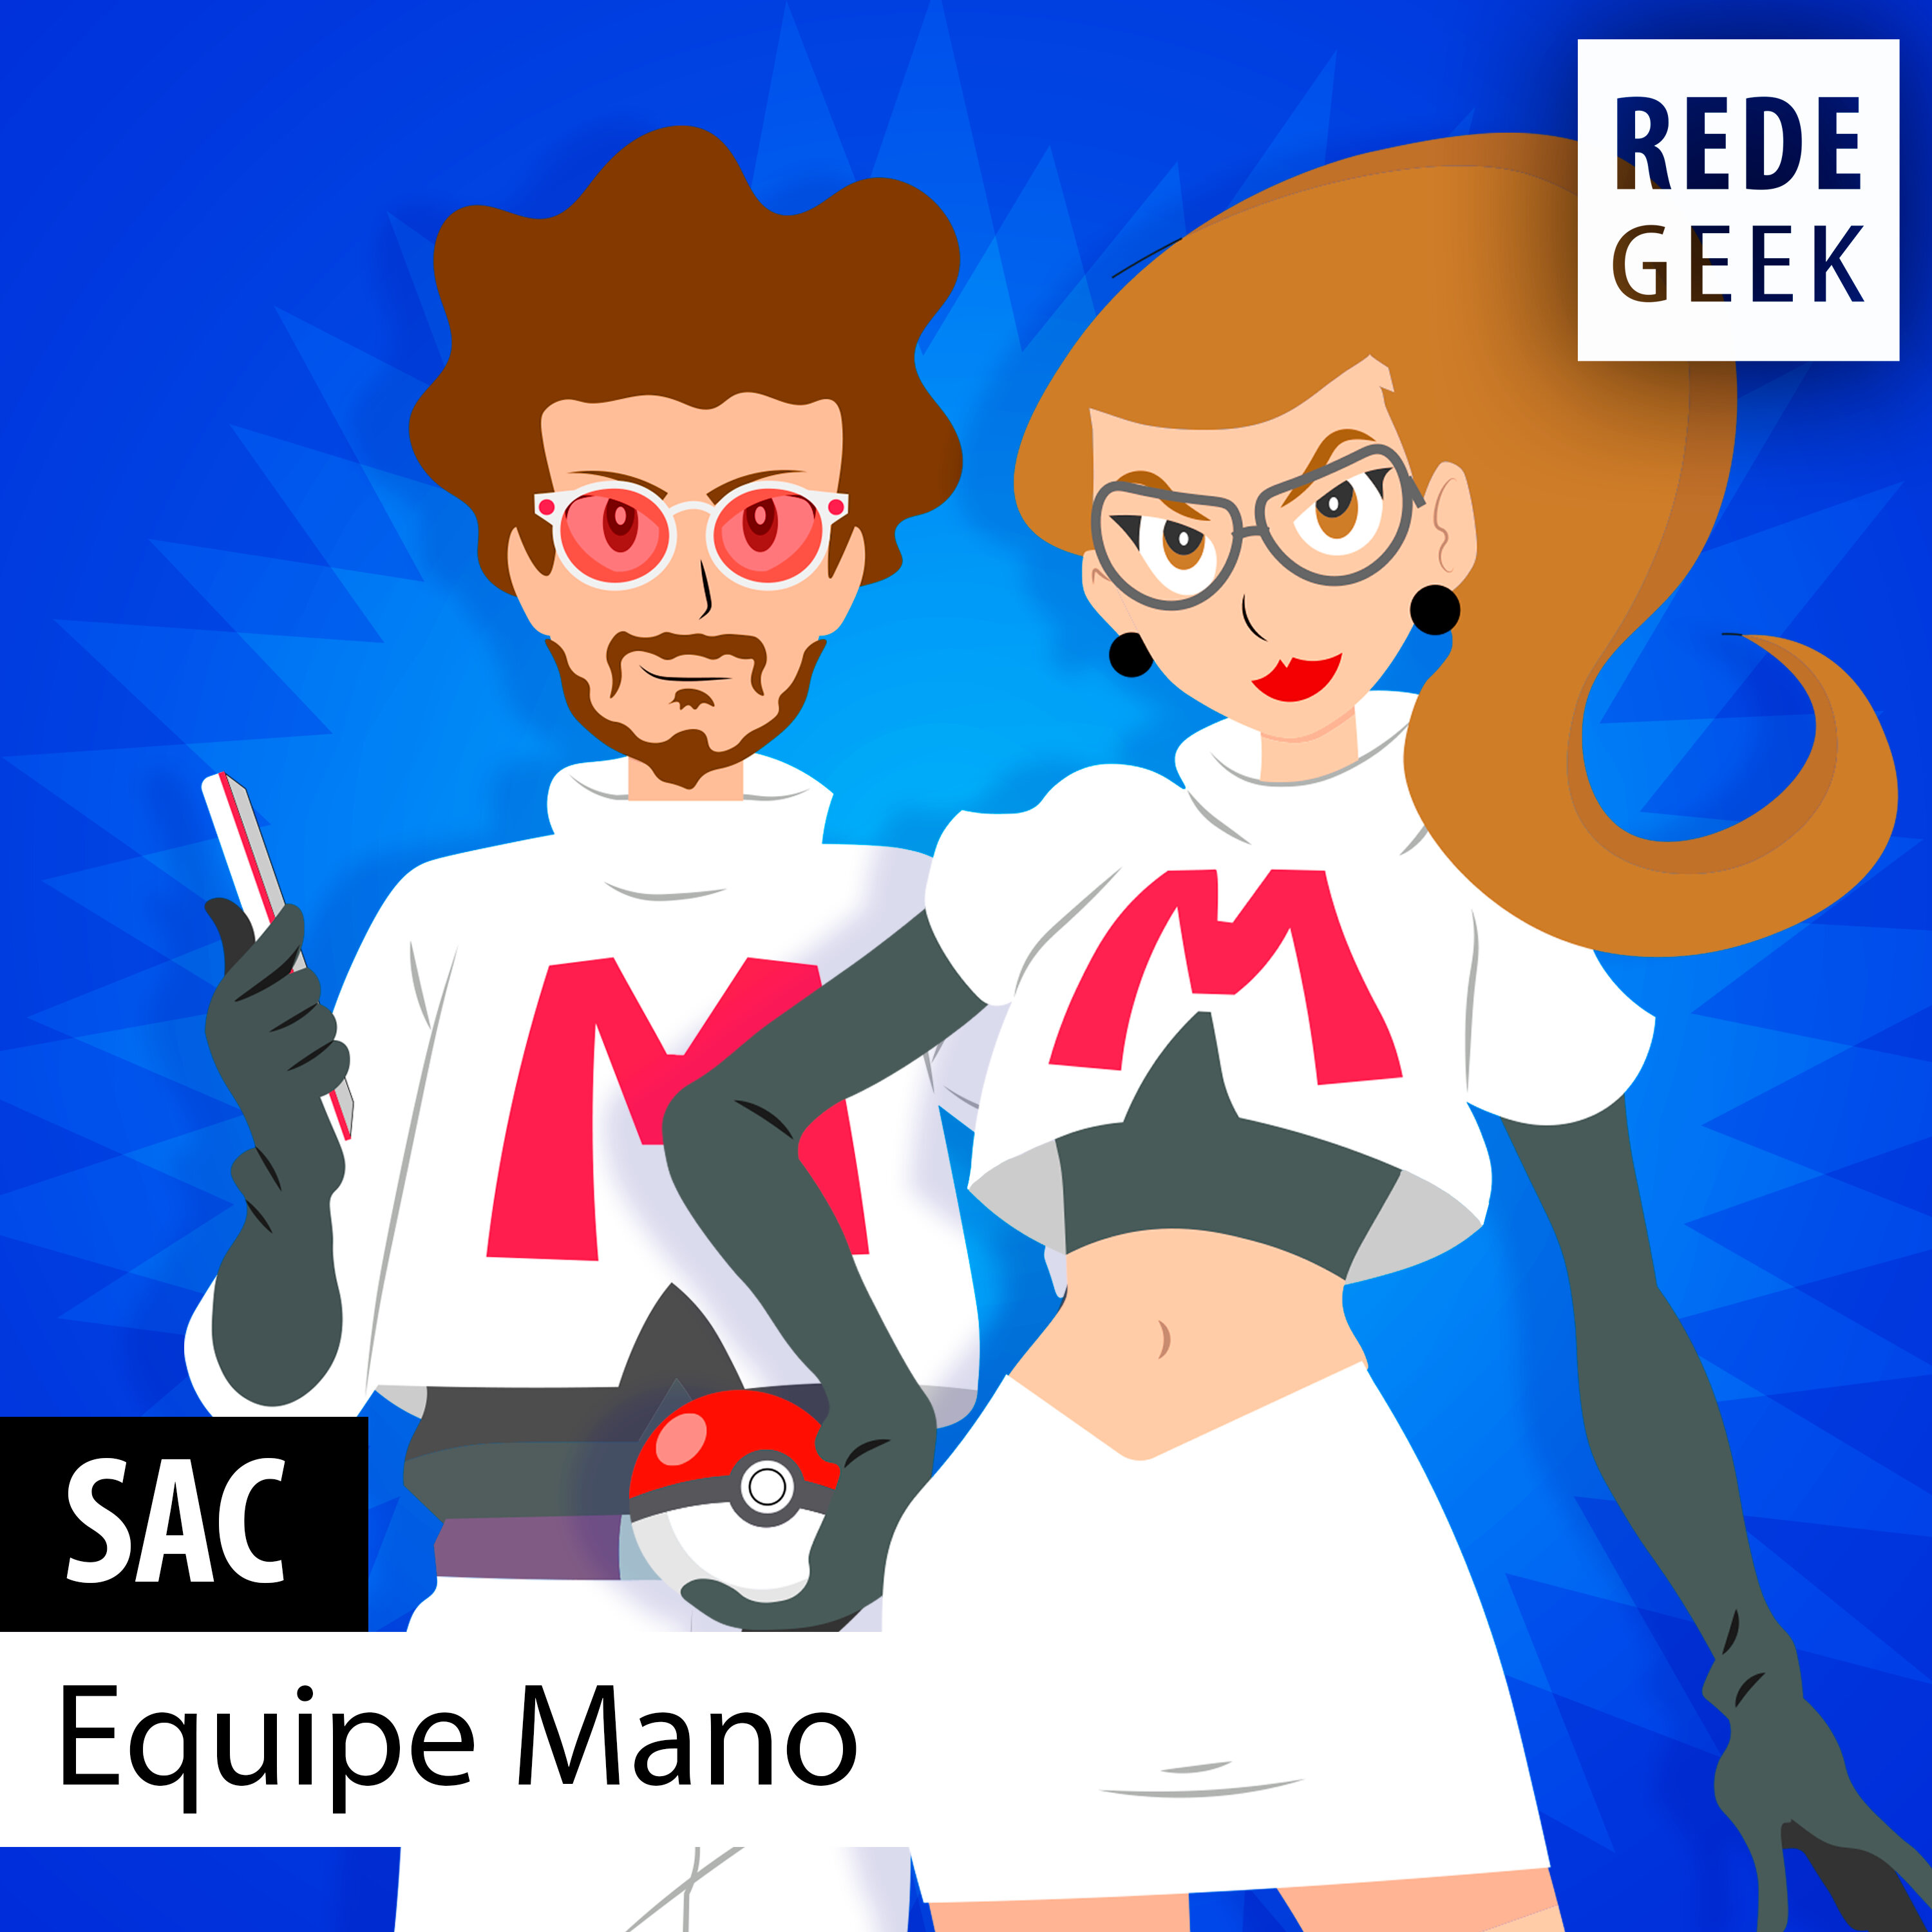 SAC - Equipe Mano